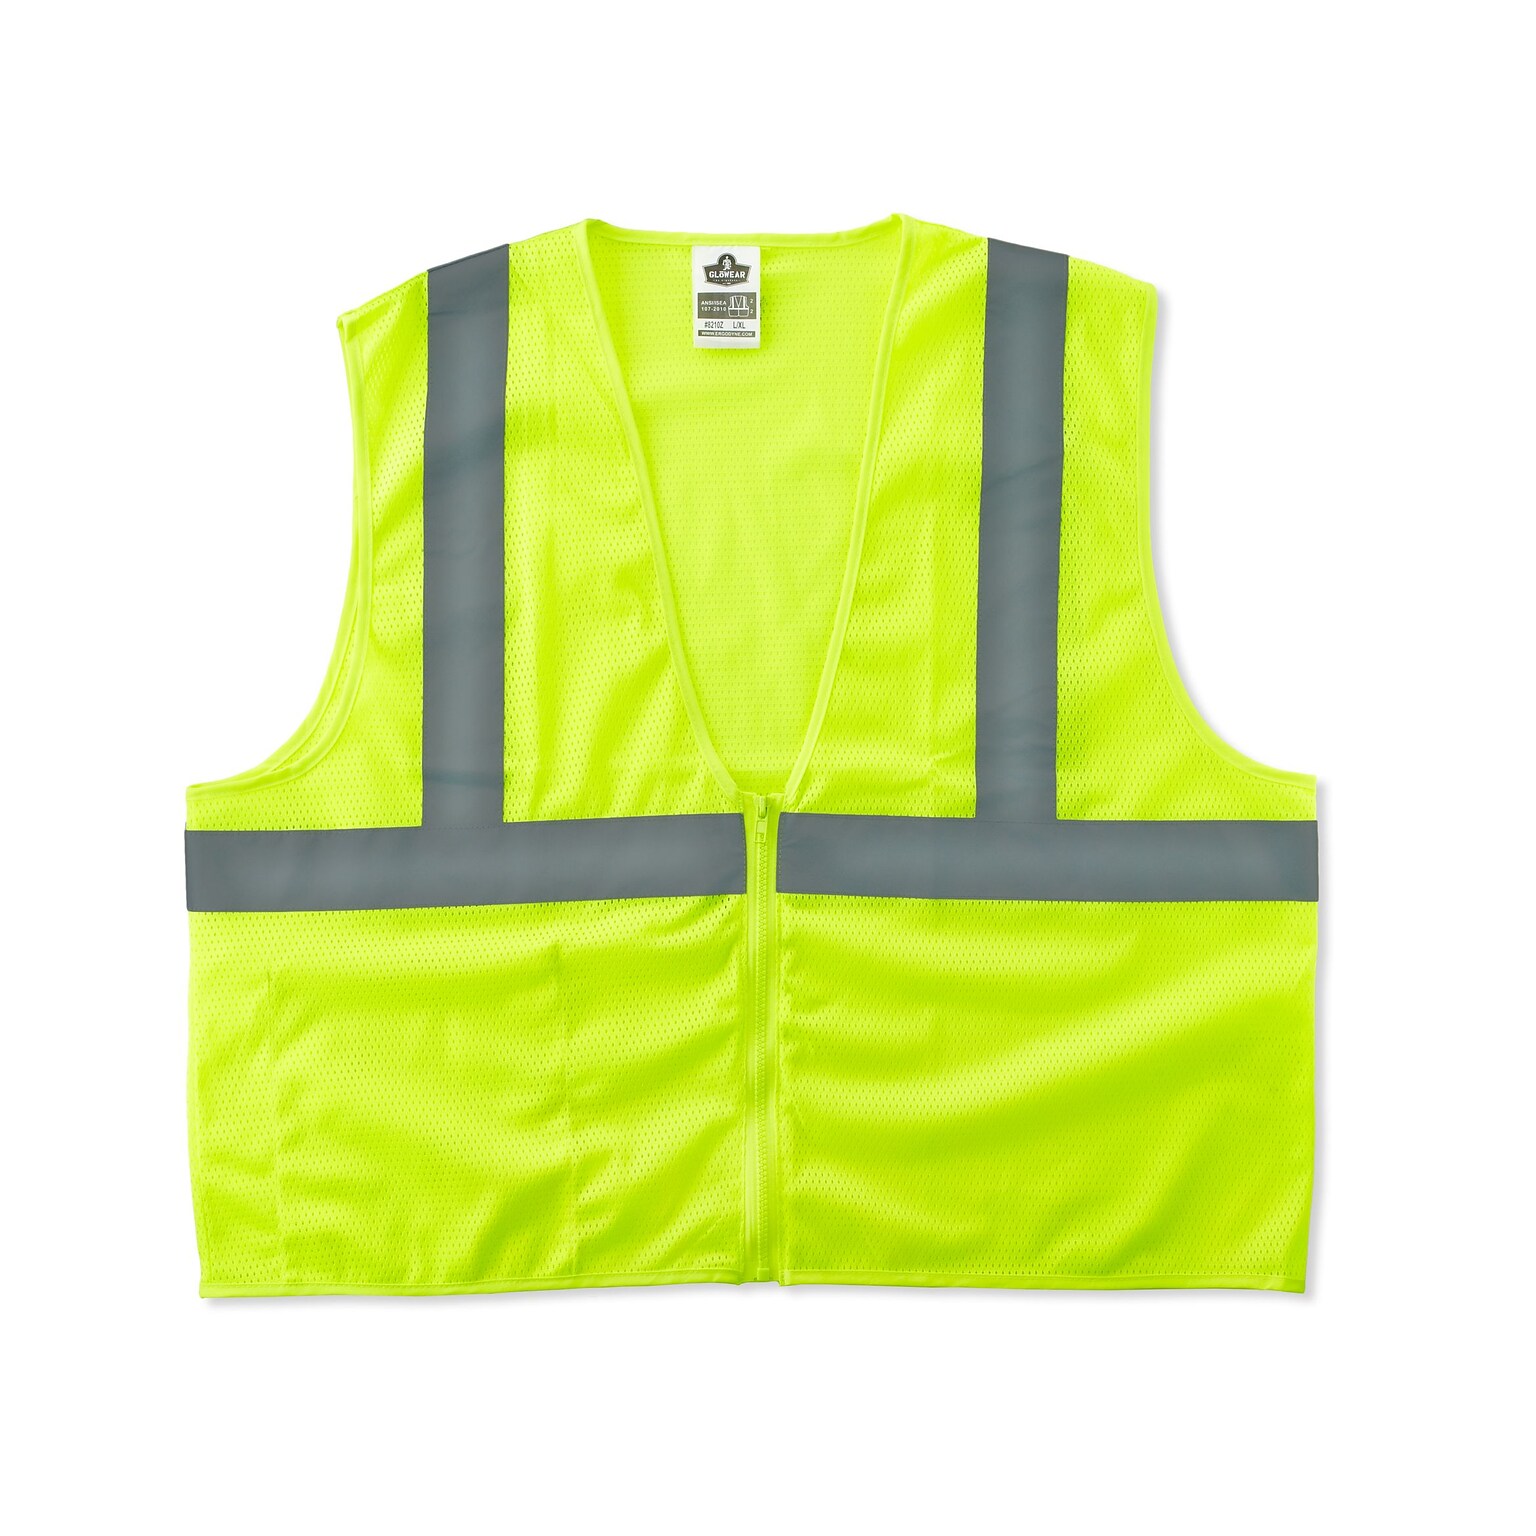 Ergodyne GloWear 8210Z High Visibility Sleeveless Safety Vest, ANSI Class R2, Small/Medium, Lime (21053)